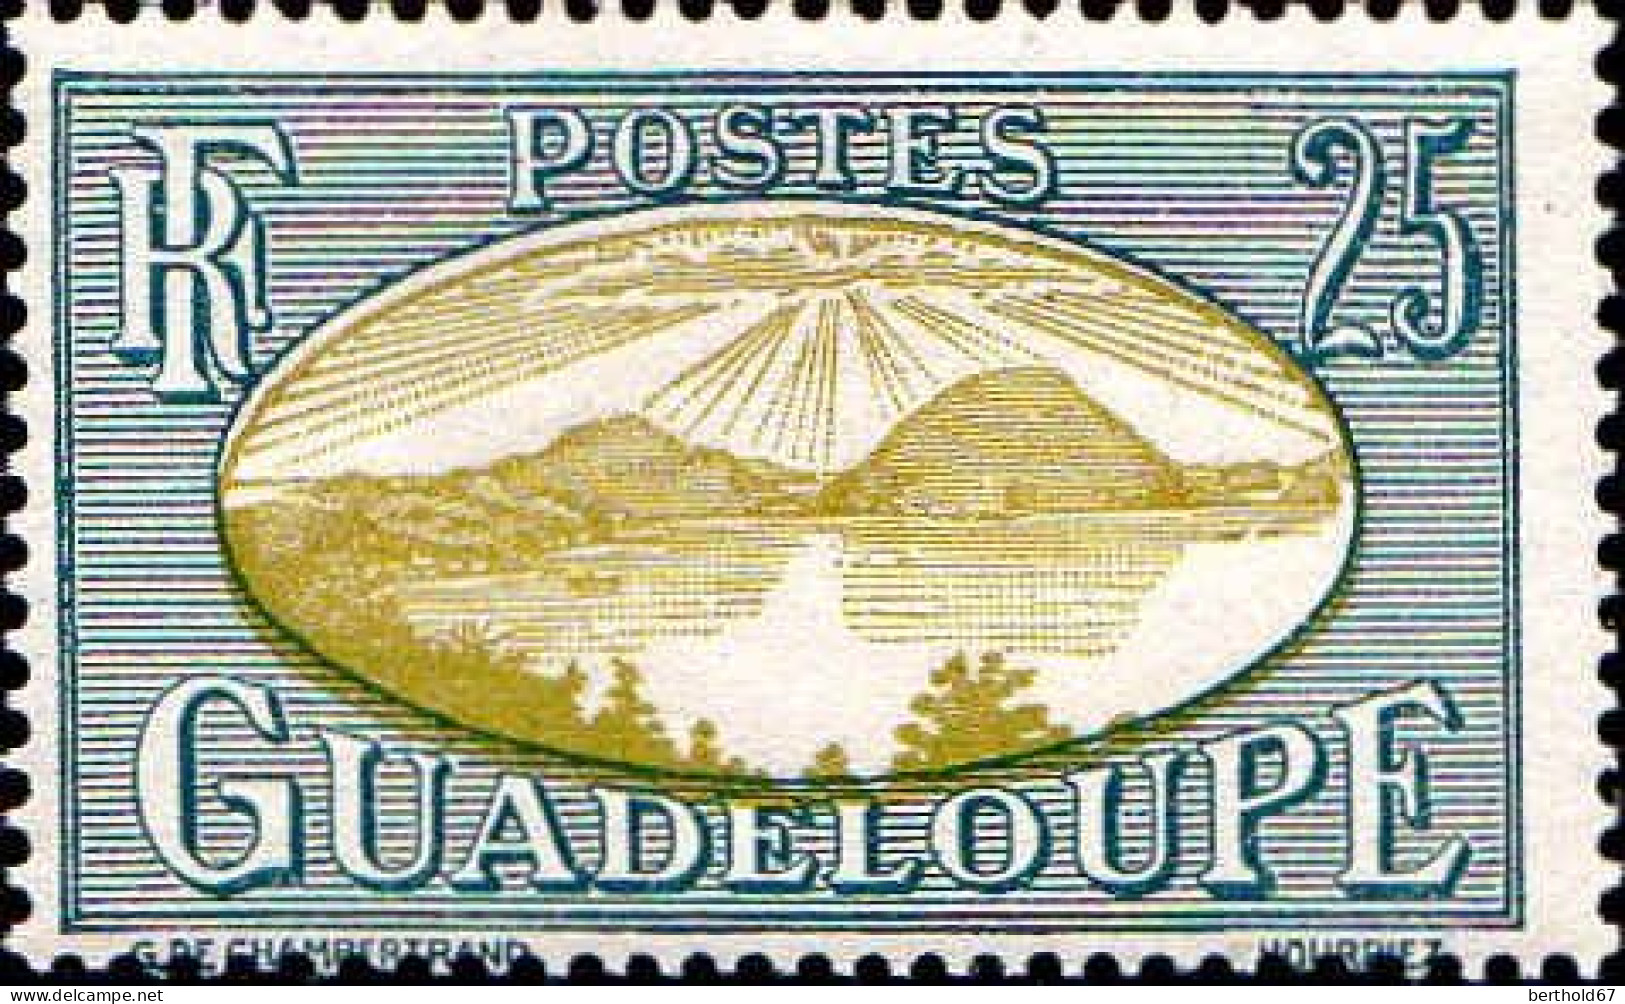 Guadeloupe Poste N** Yv:106 Mi:103 Rade Des Saintes (G.trop.) - Ongebruikt